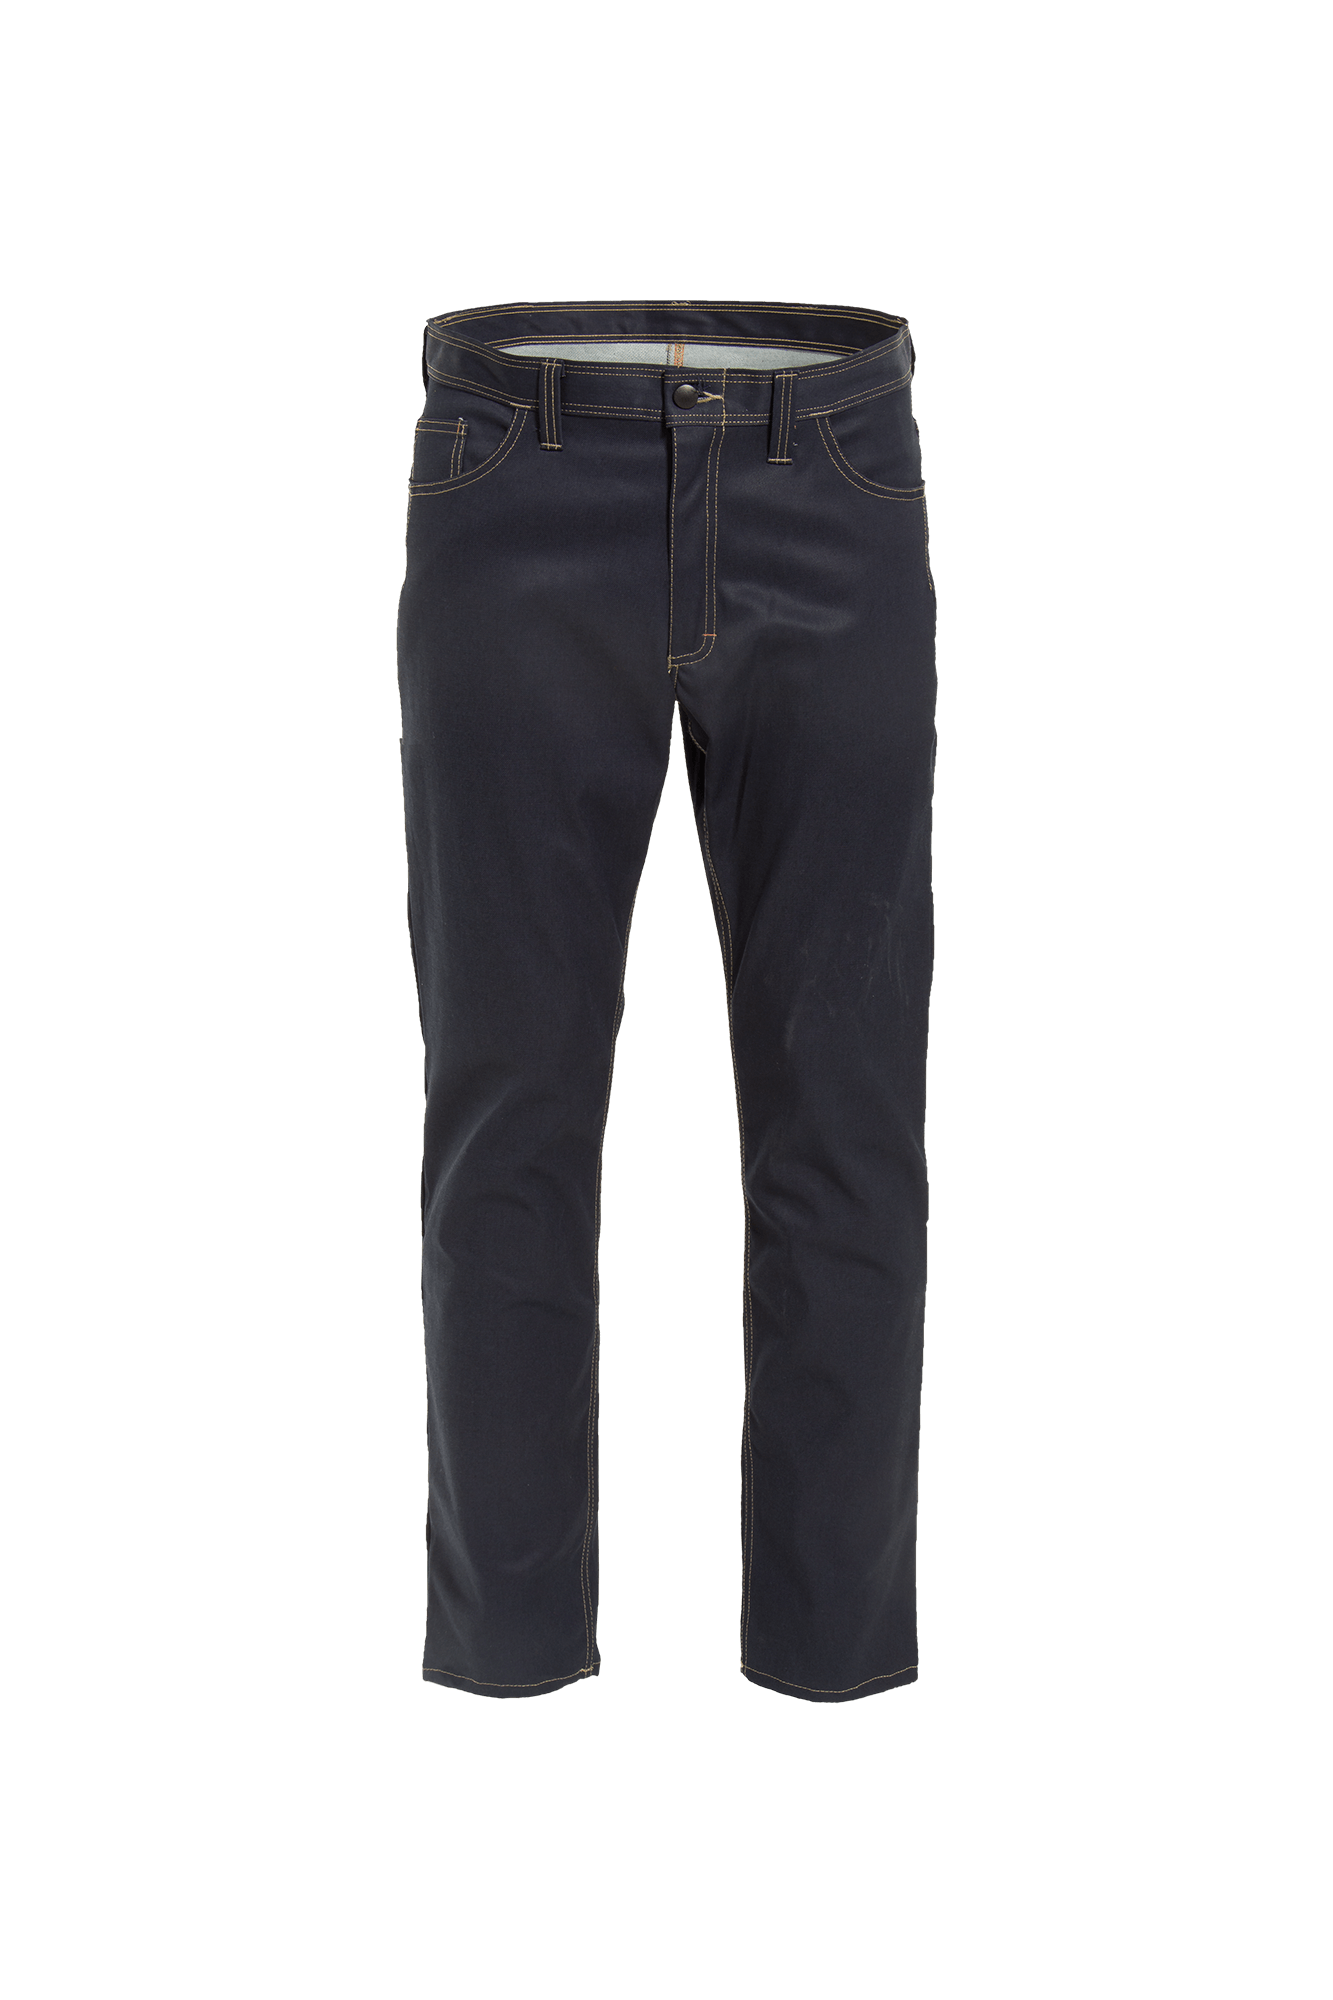 Flammehæmmende stretch jeans front